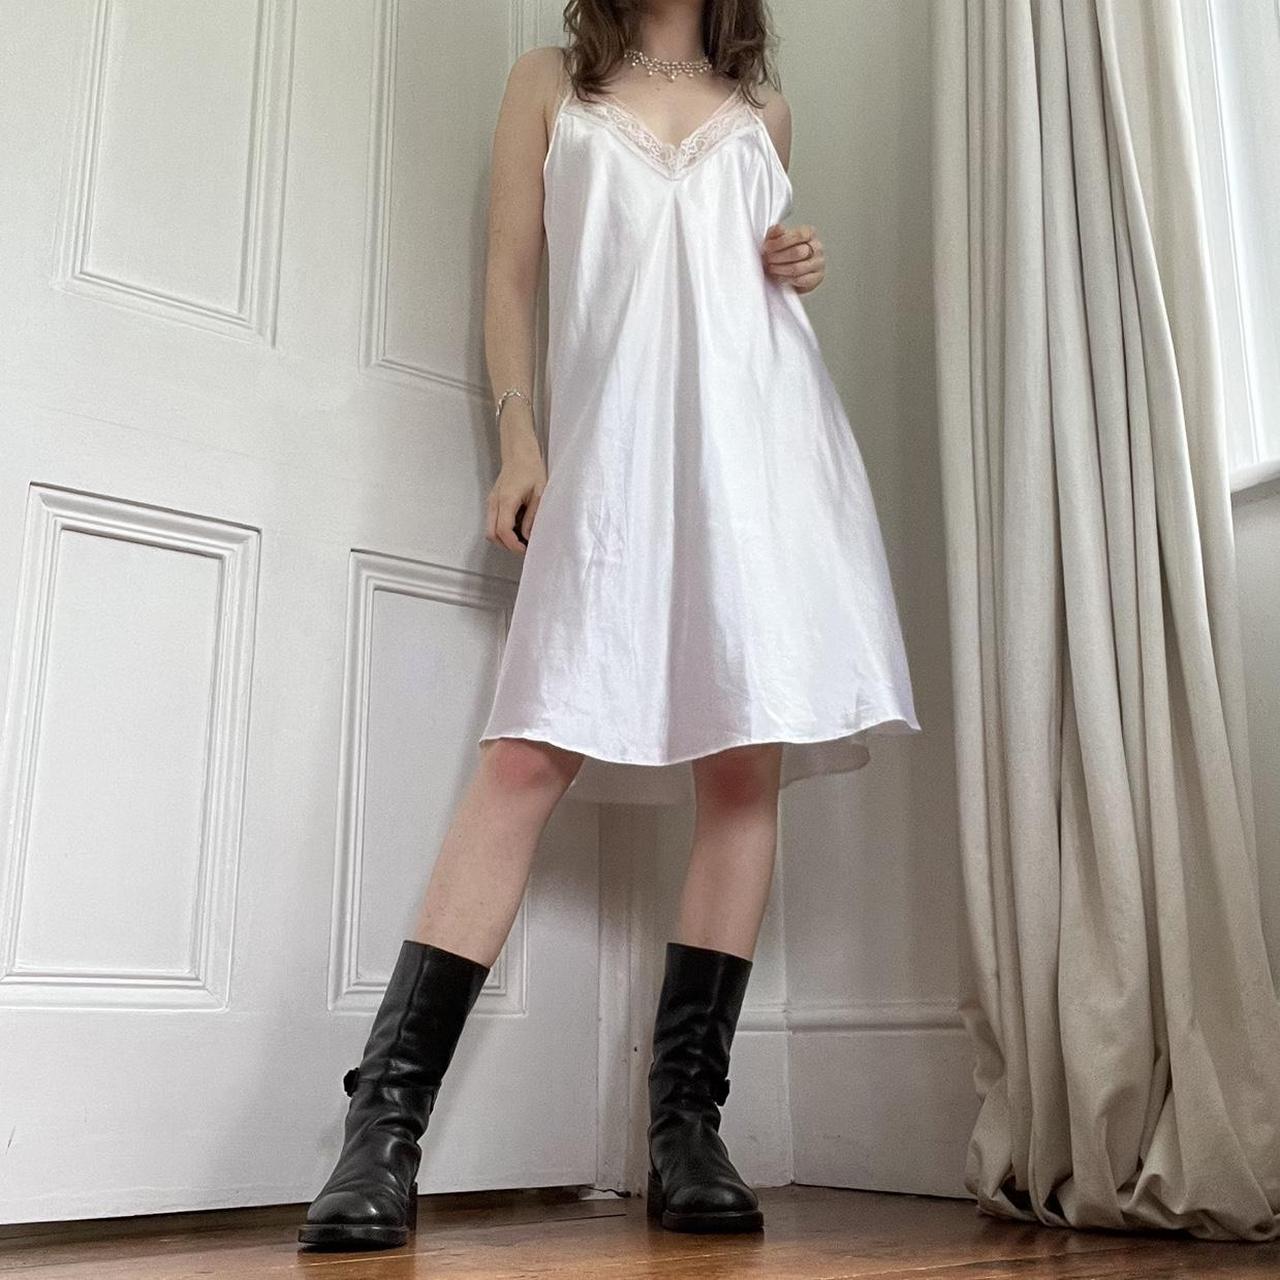 satin slip dress 💋 ABOUT THIS ITEM Vintage white... - Depop